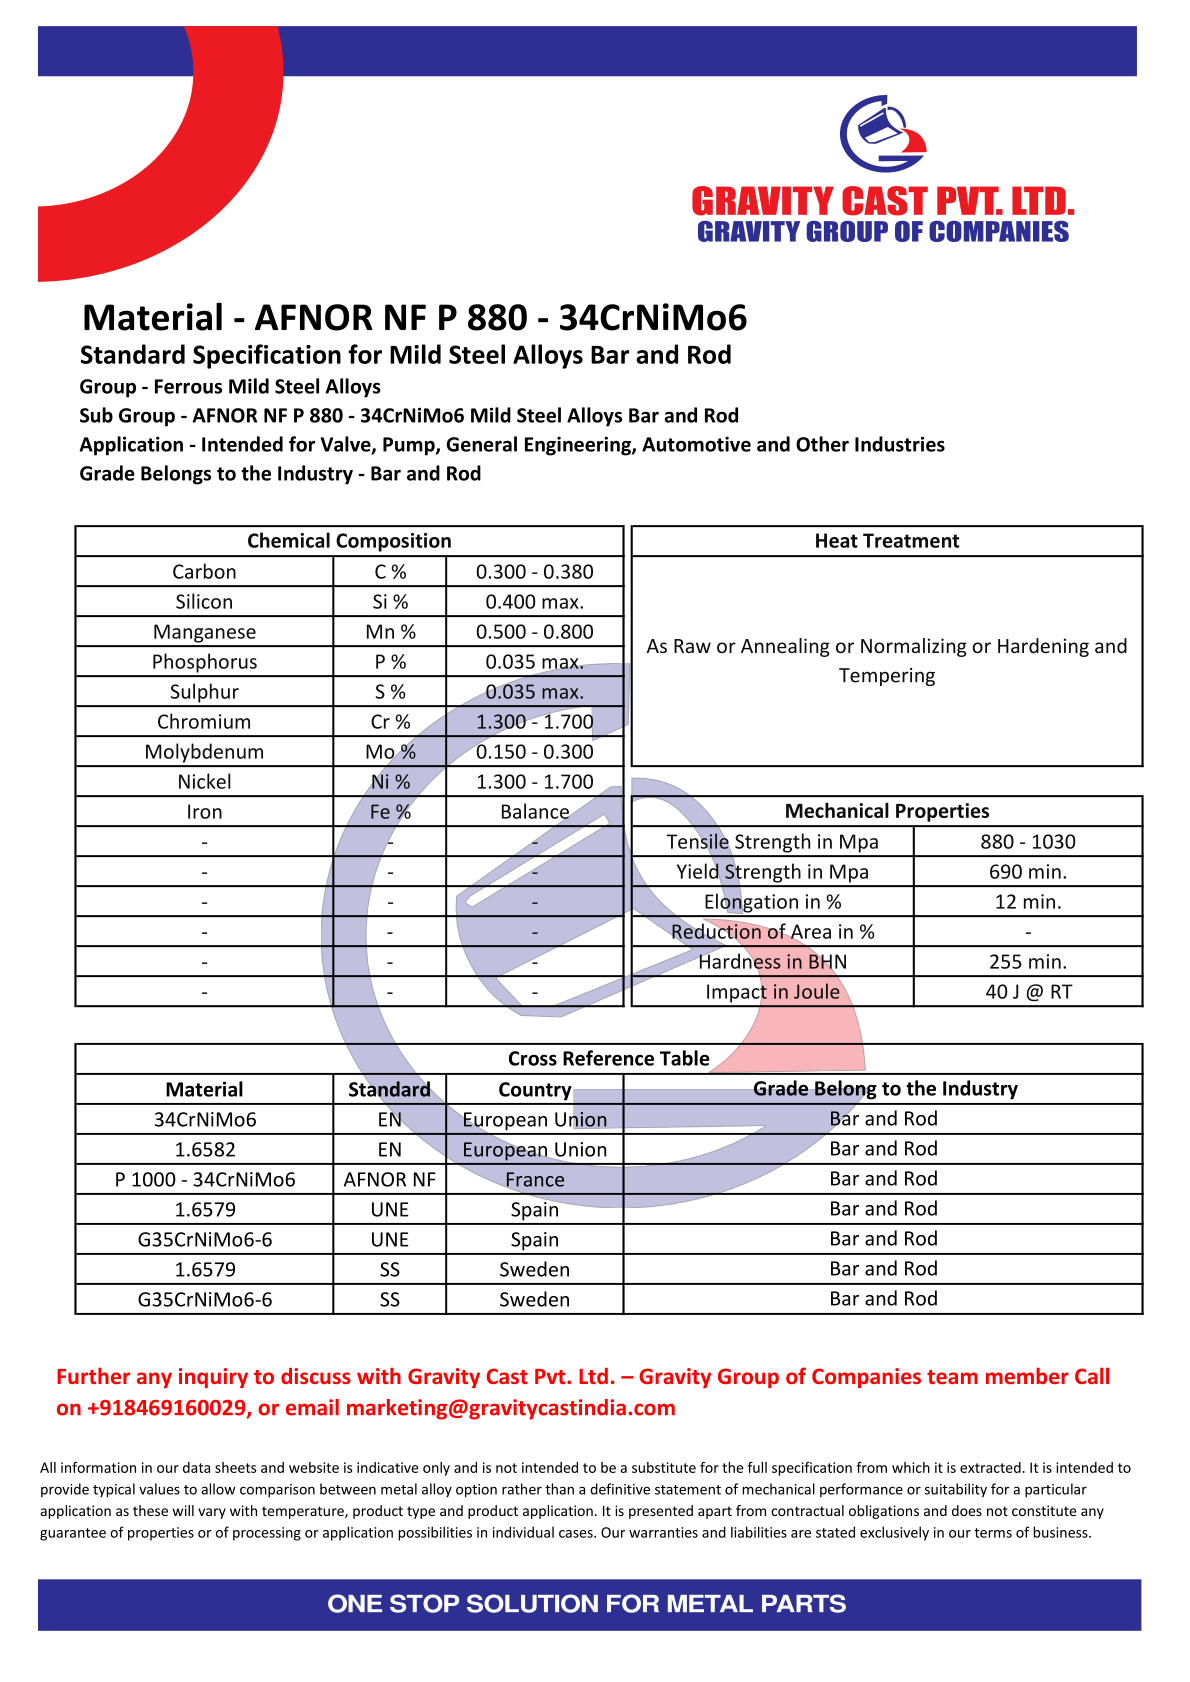 AFNOR NF P 880 - 34CrNiMo6.pdf